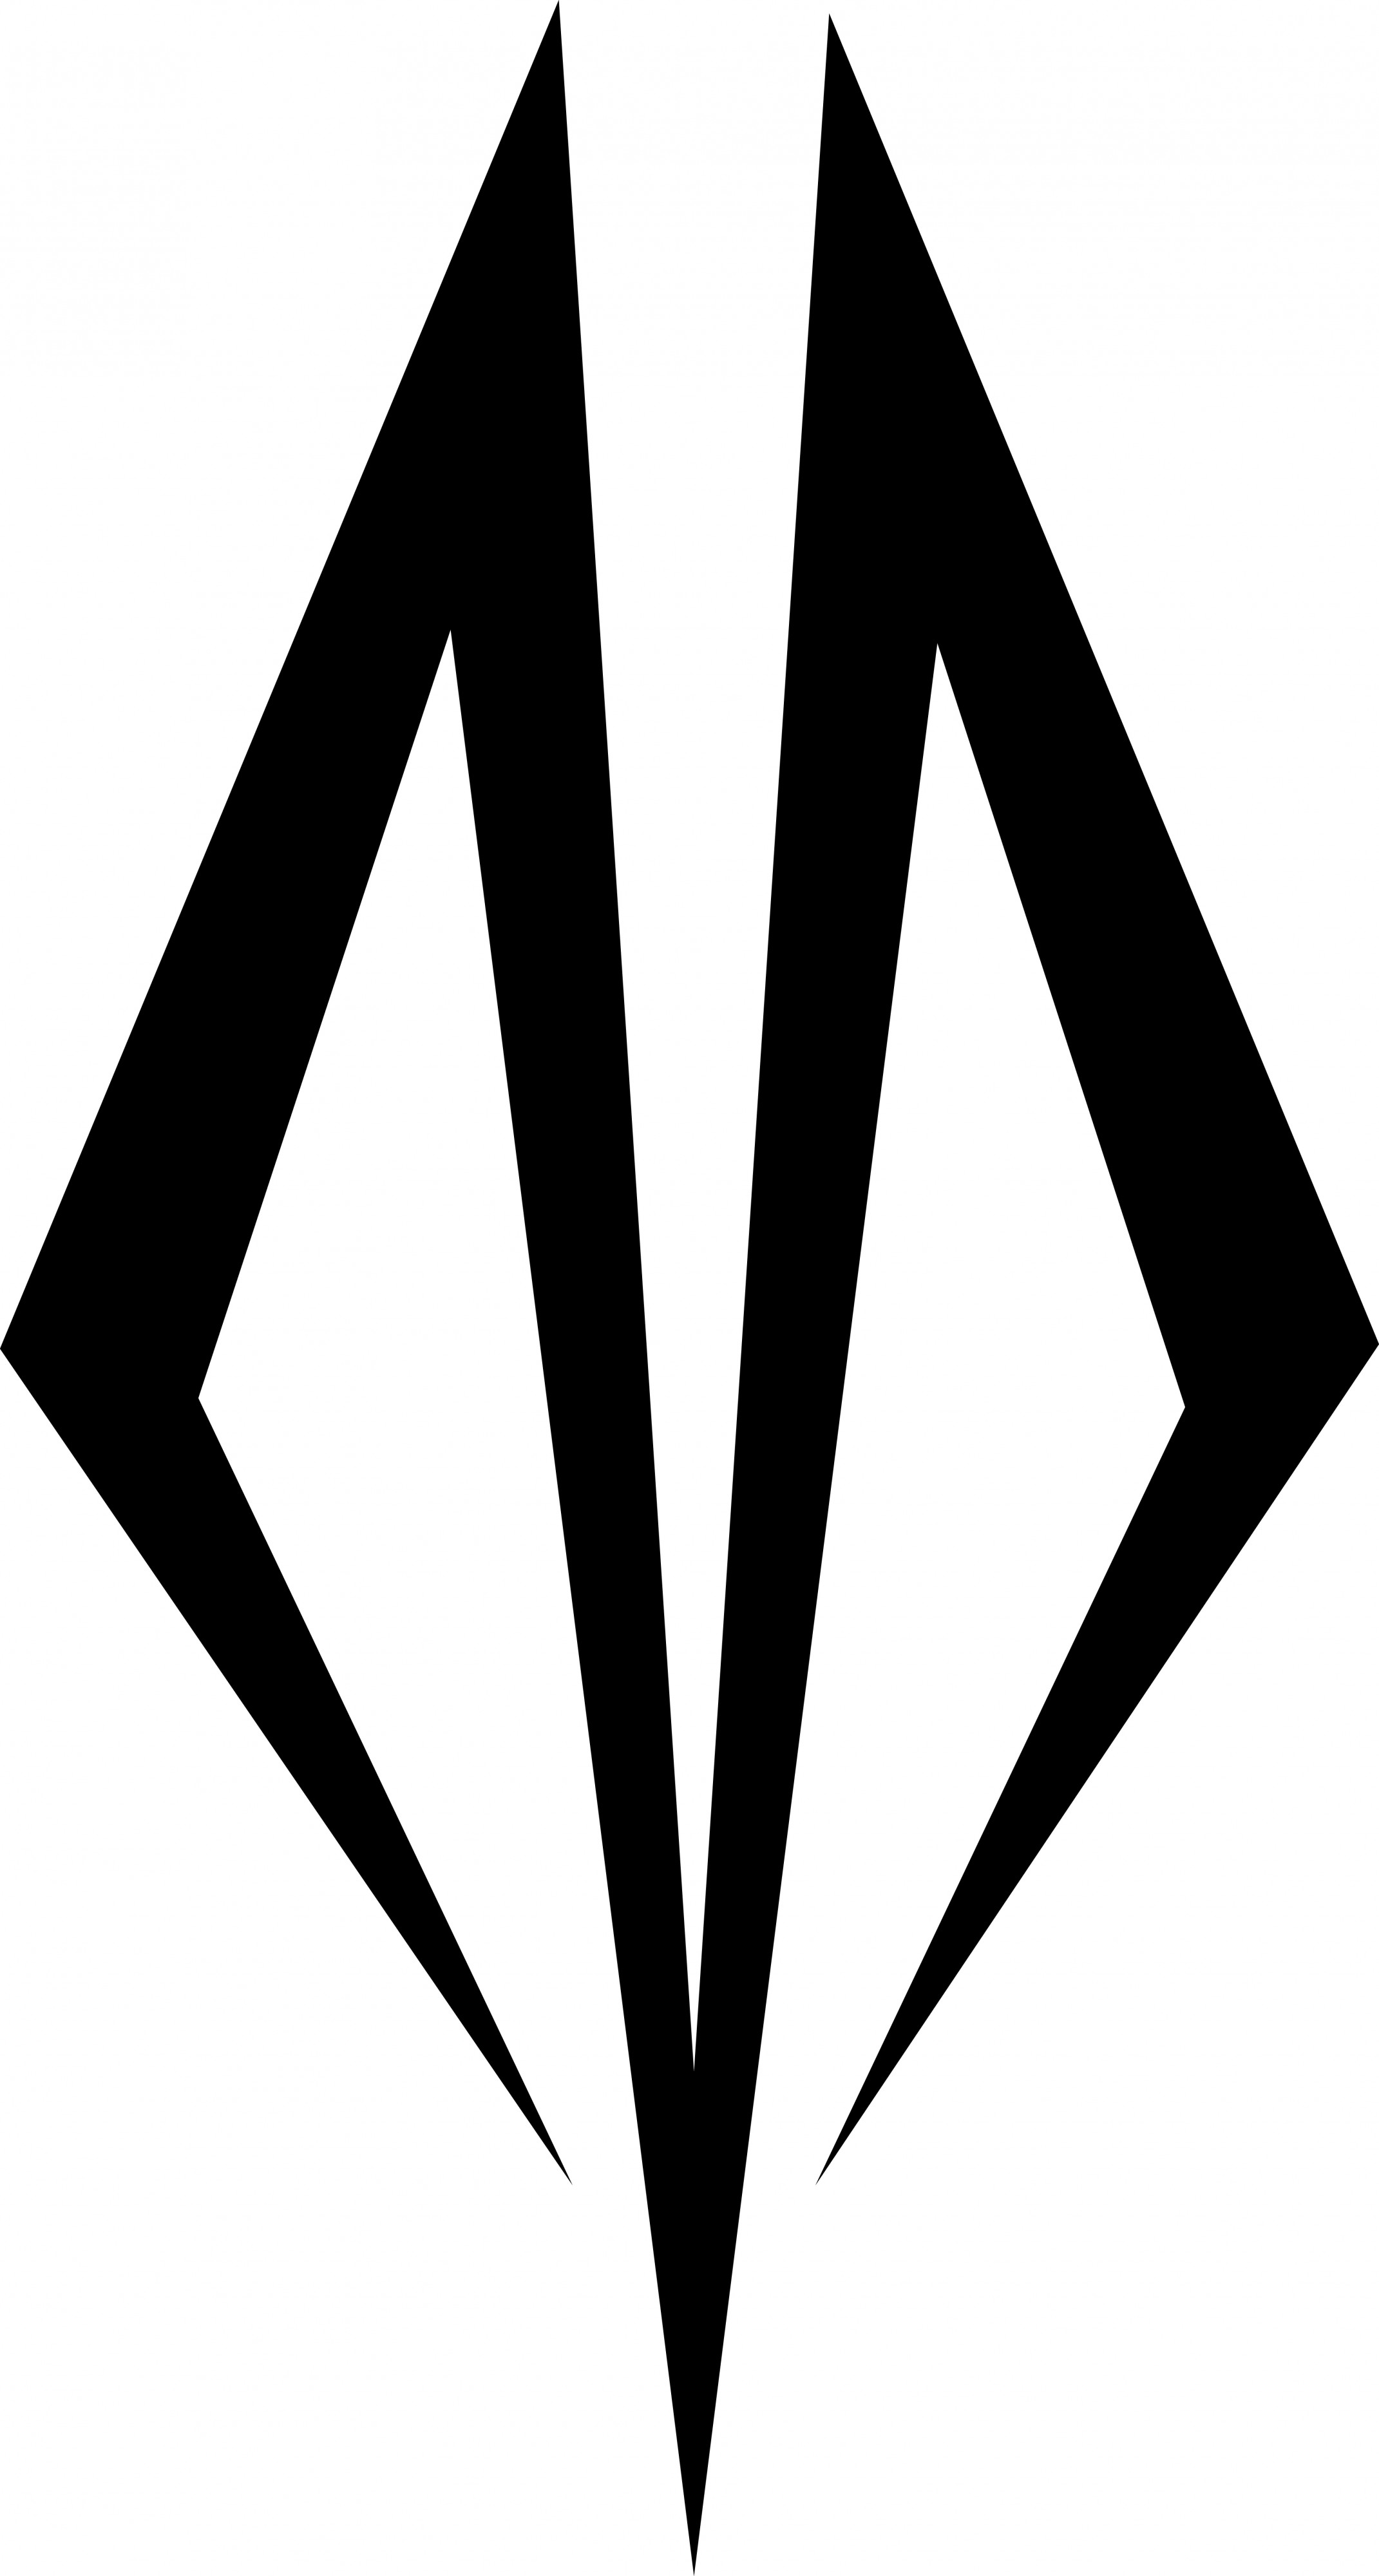 Cyan velvet project logo highres